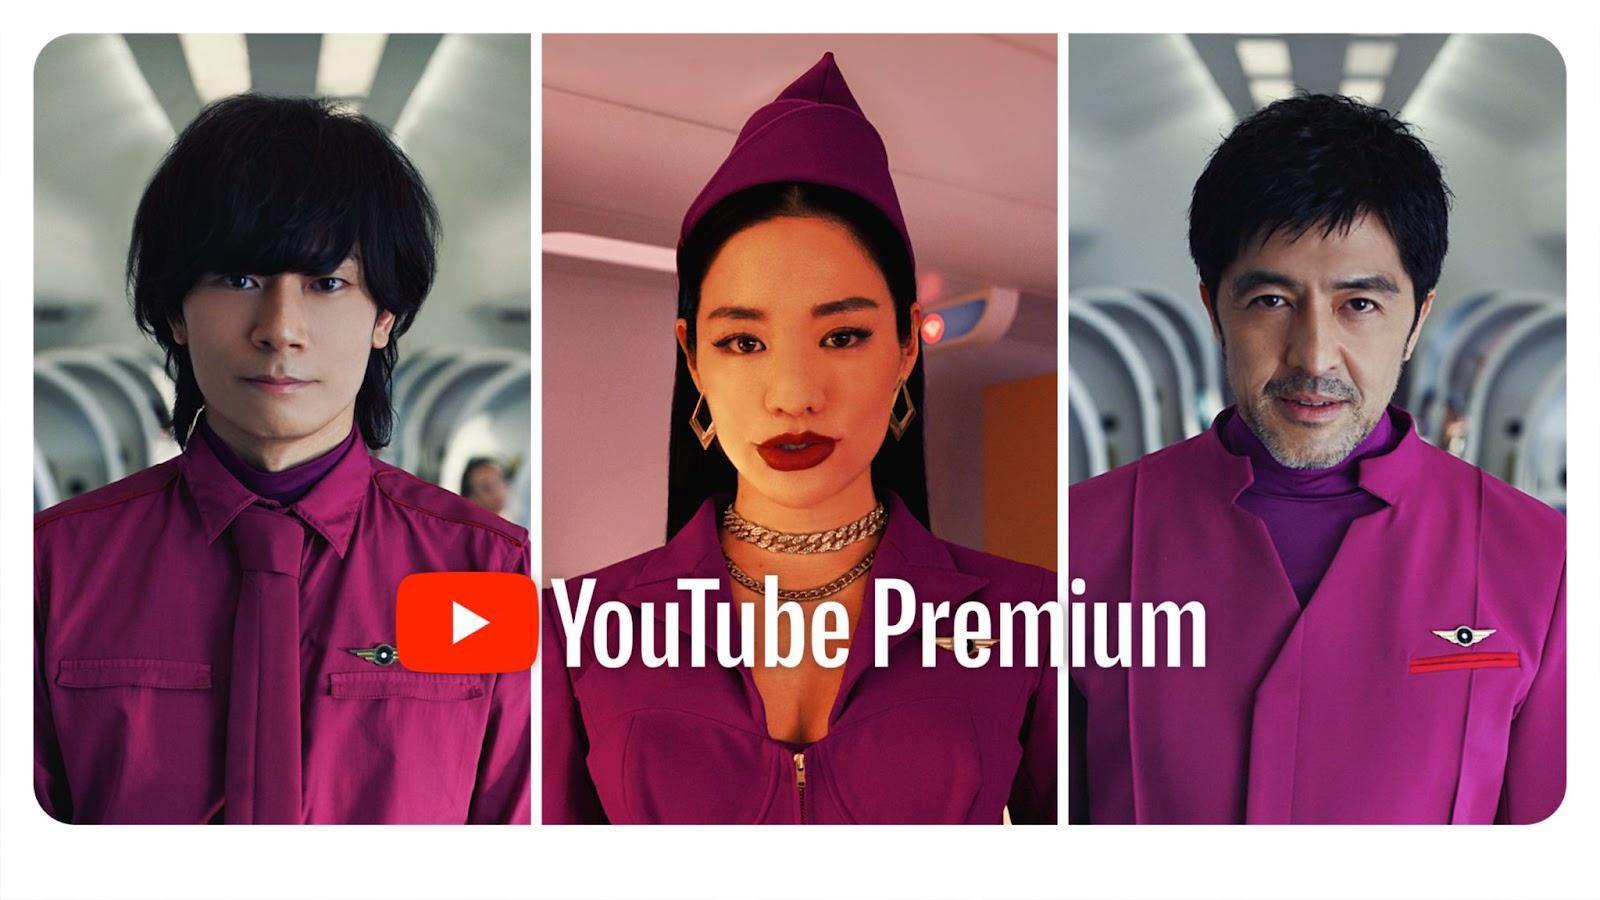 YouTube-Premium-Campaign.jpg